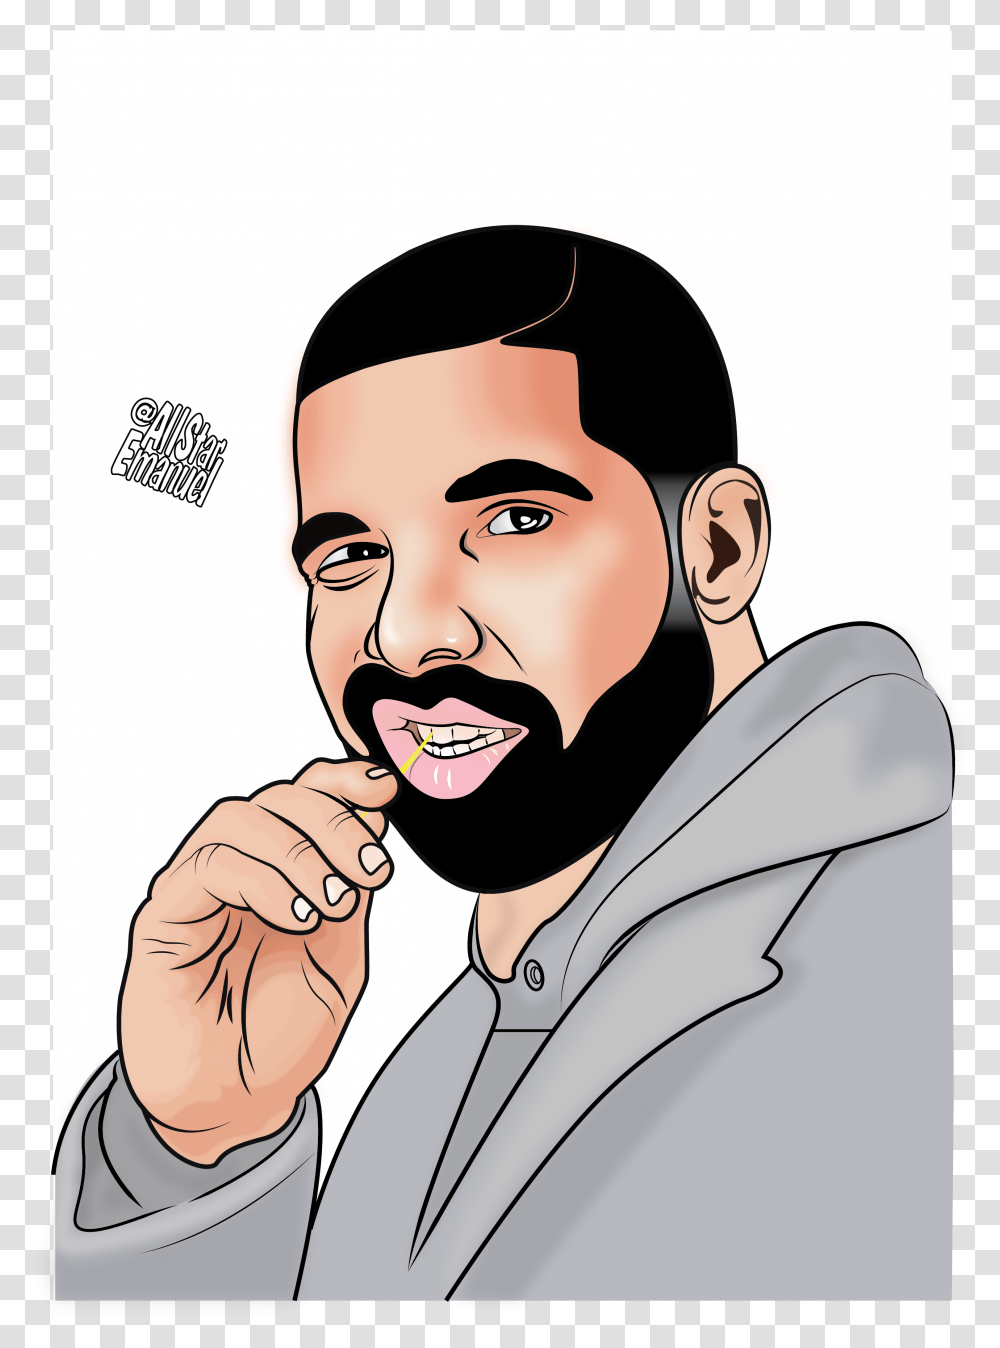 Drake Drawing Painting Cartoon Sketch Drake Drawing Cartoon, Face